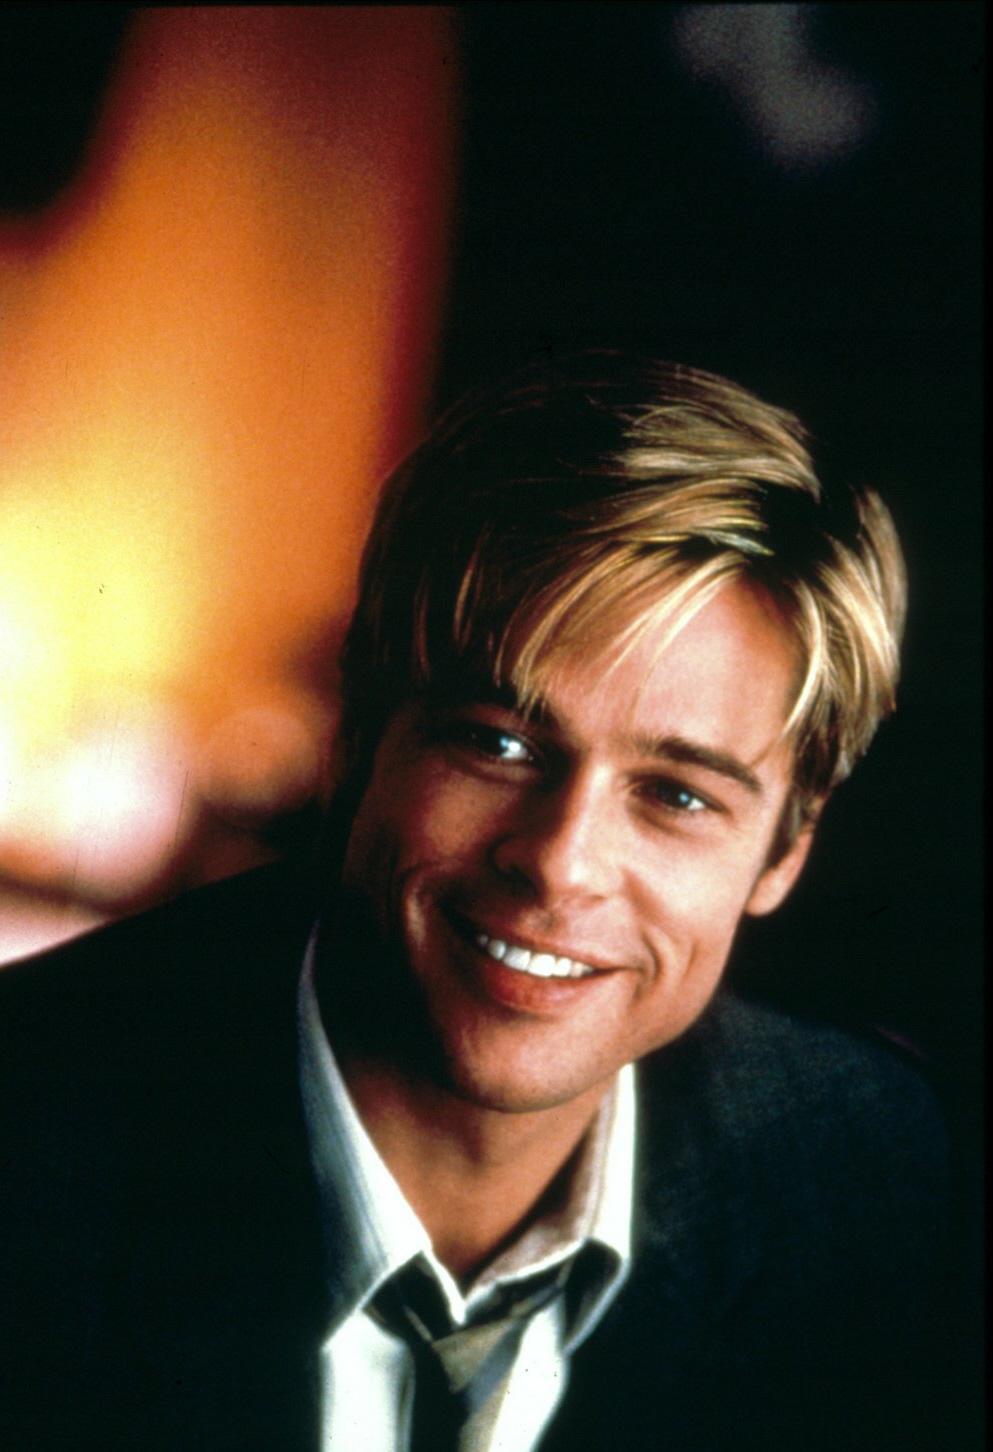 Brad Pitt - Images